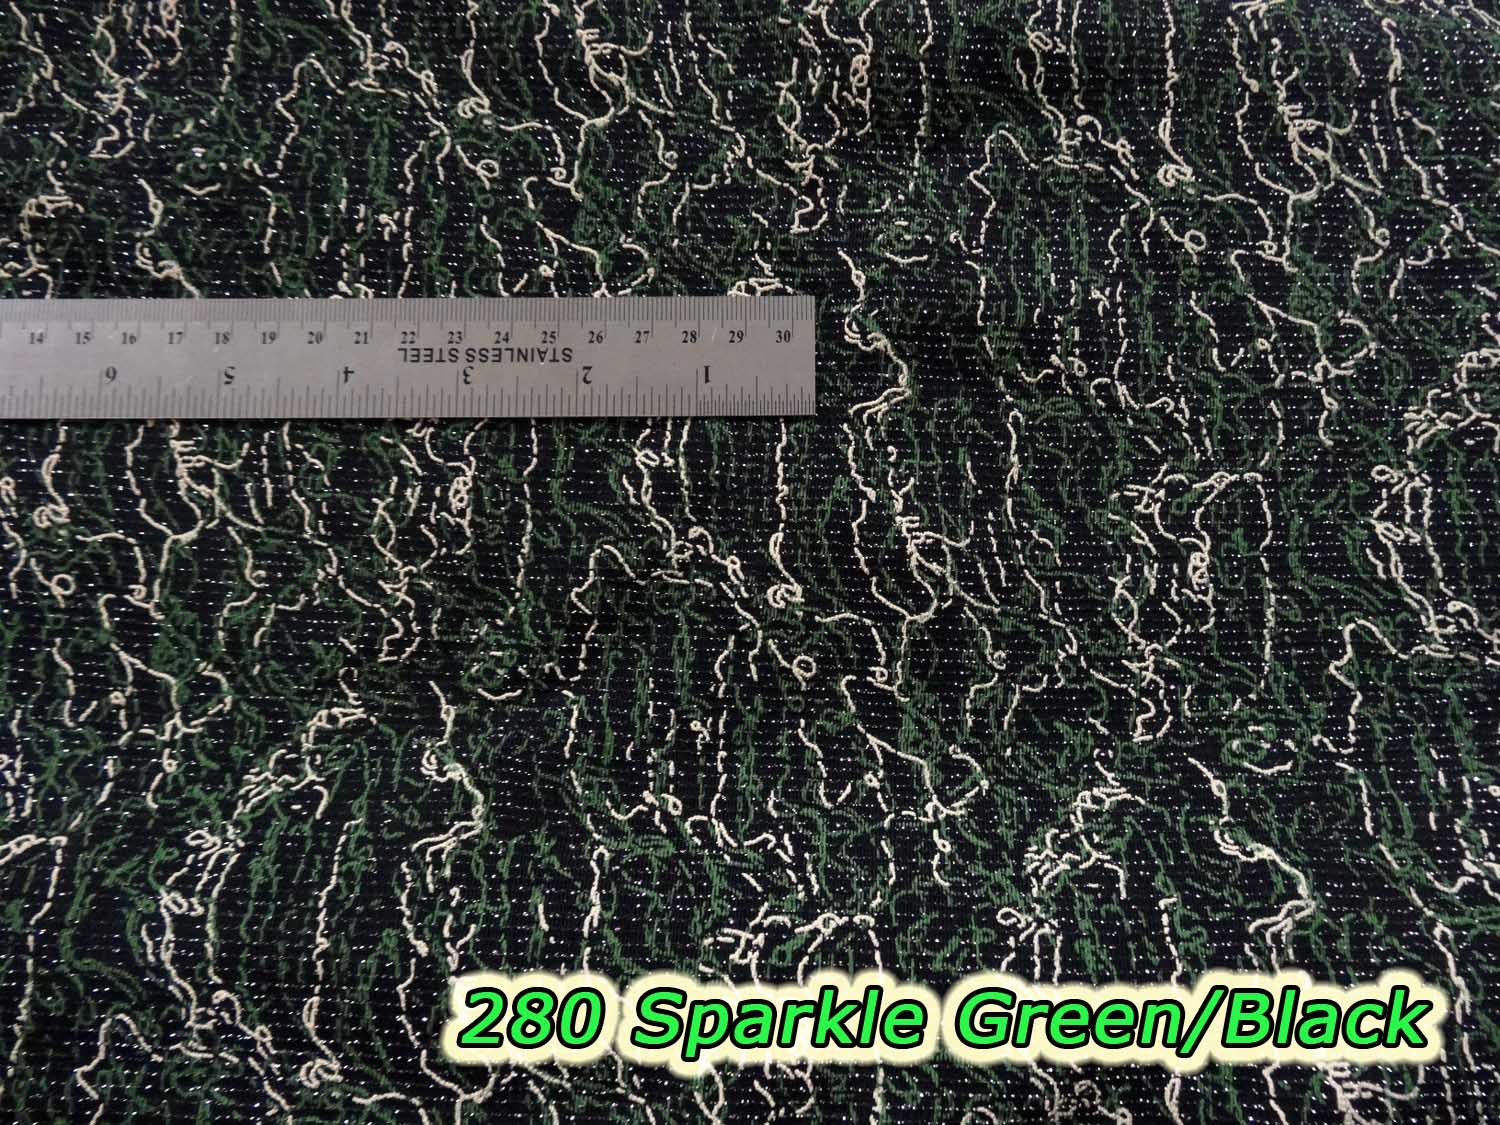 280 Sparkle Green/Black